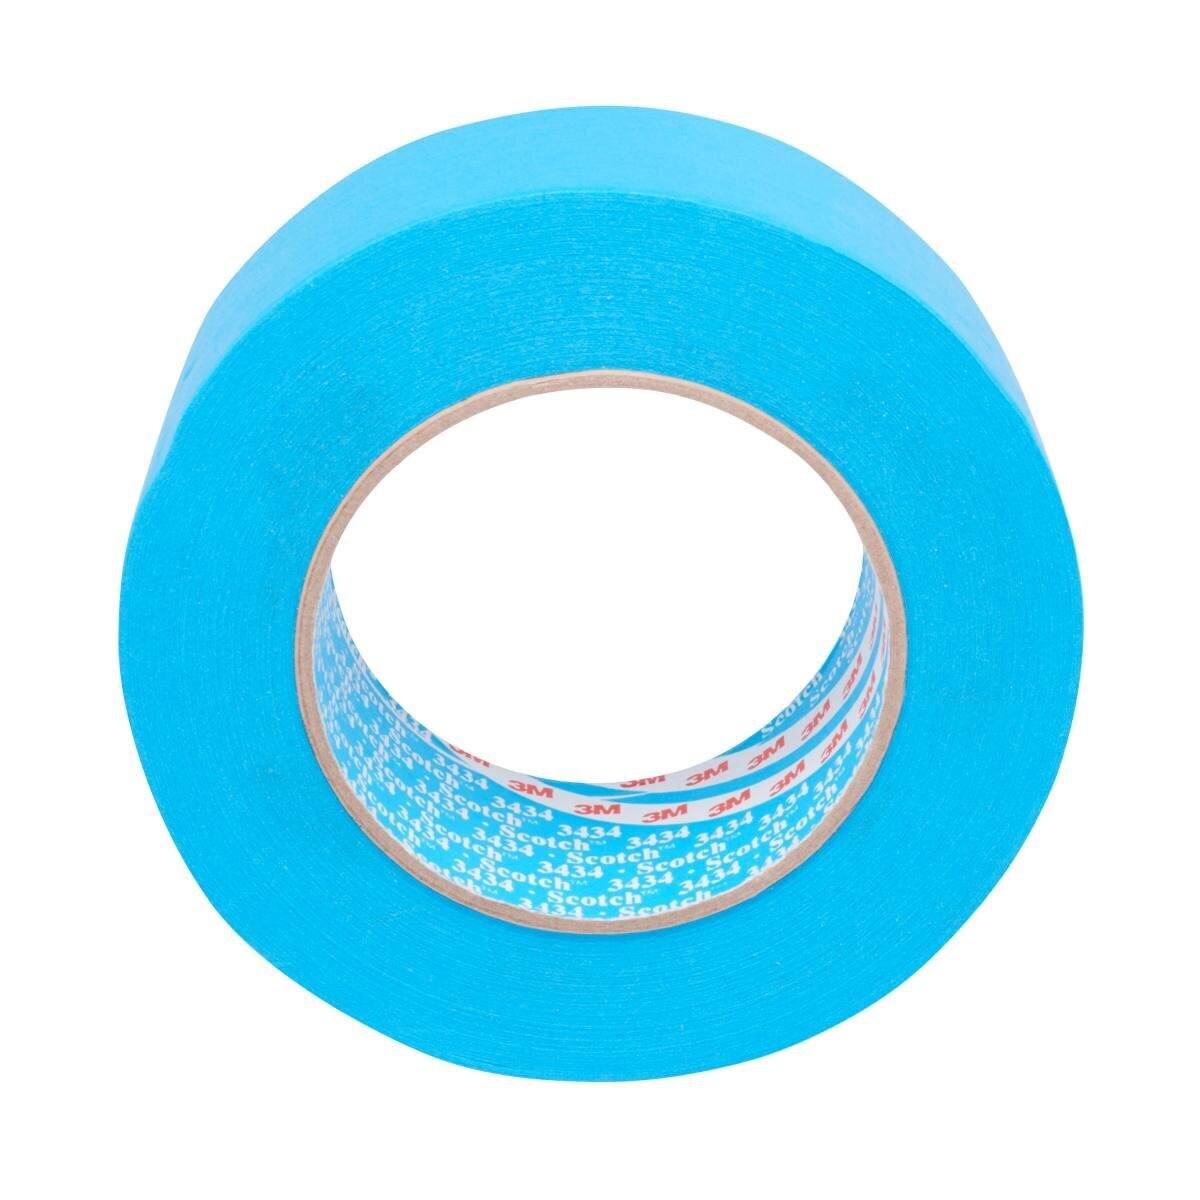 3M Scotch Blauwe Tape 3434, Blauw, 48 mm x 50 m #07899